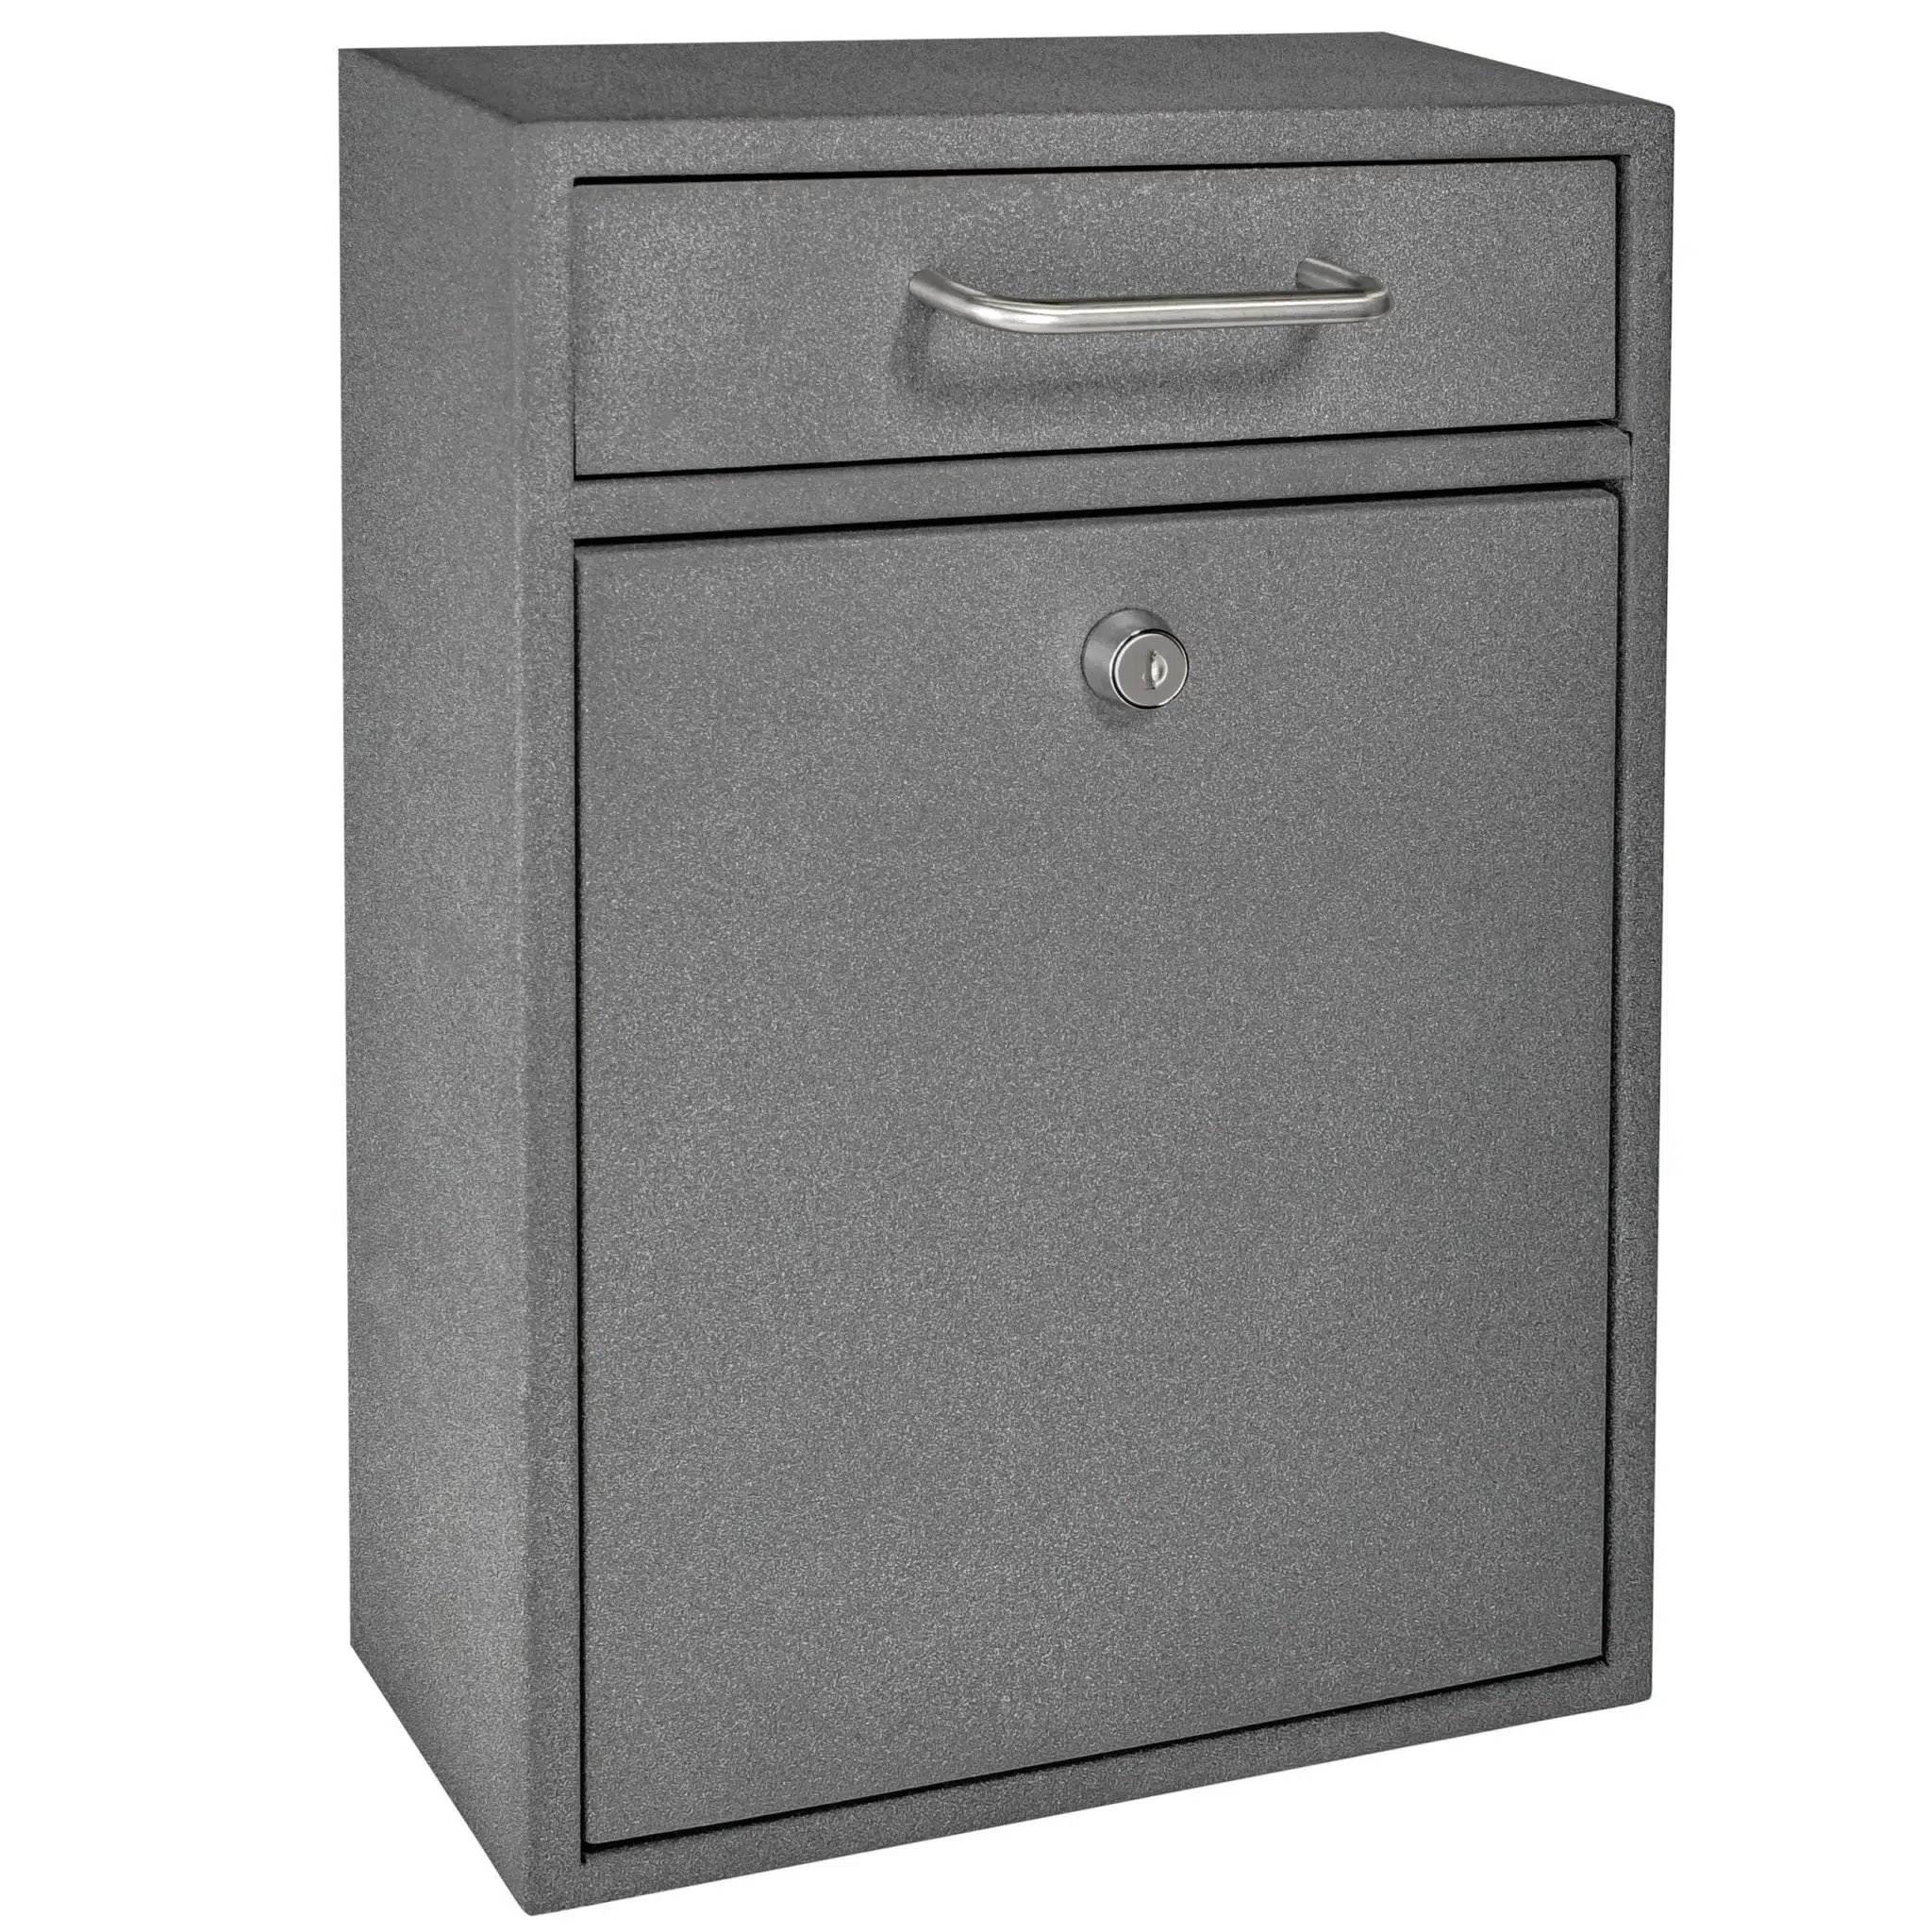 Epoch Design Mailbox - Locking Wall Mount Mail Drop Box